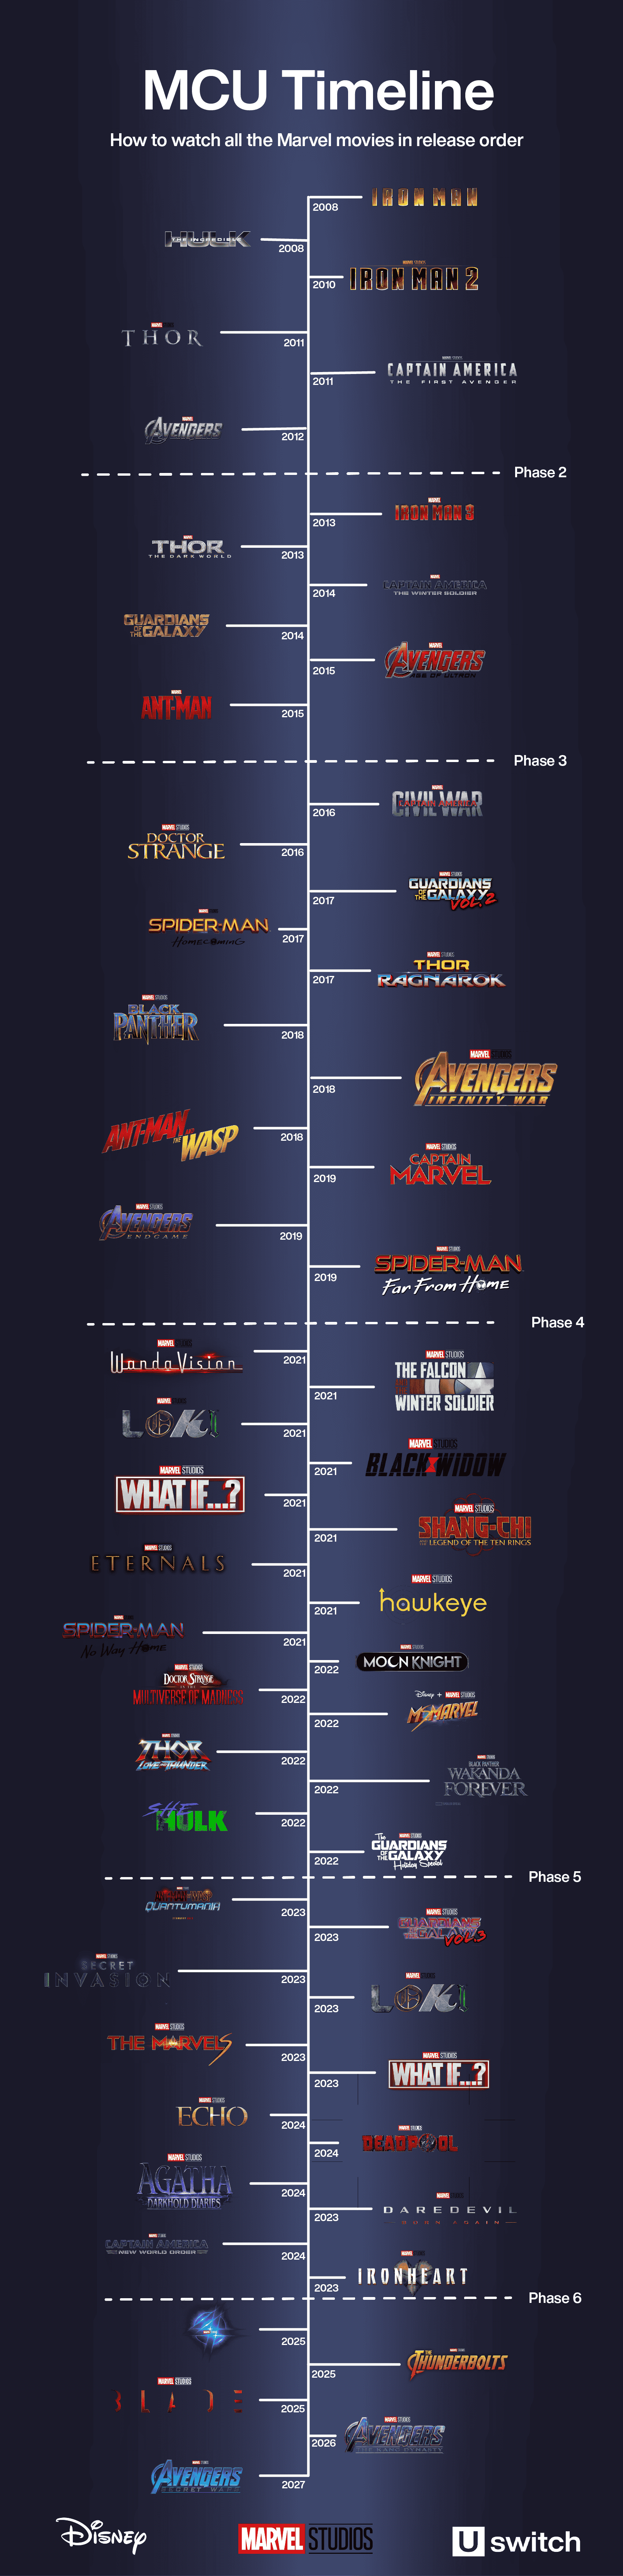 MCU timeline - Marvel movies in release order